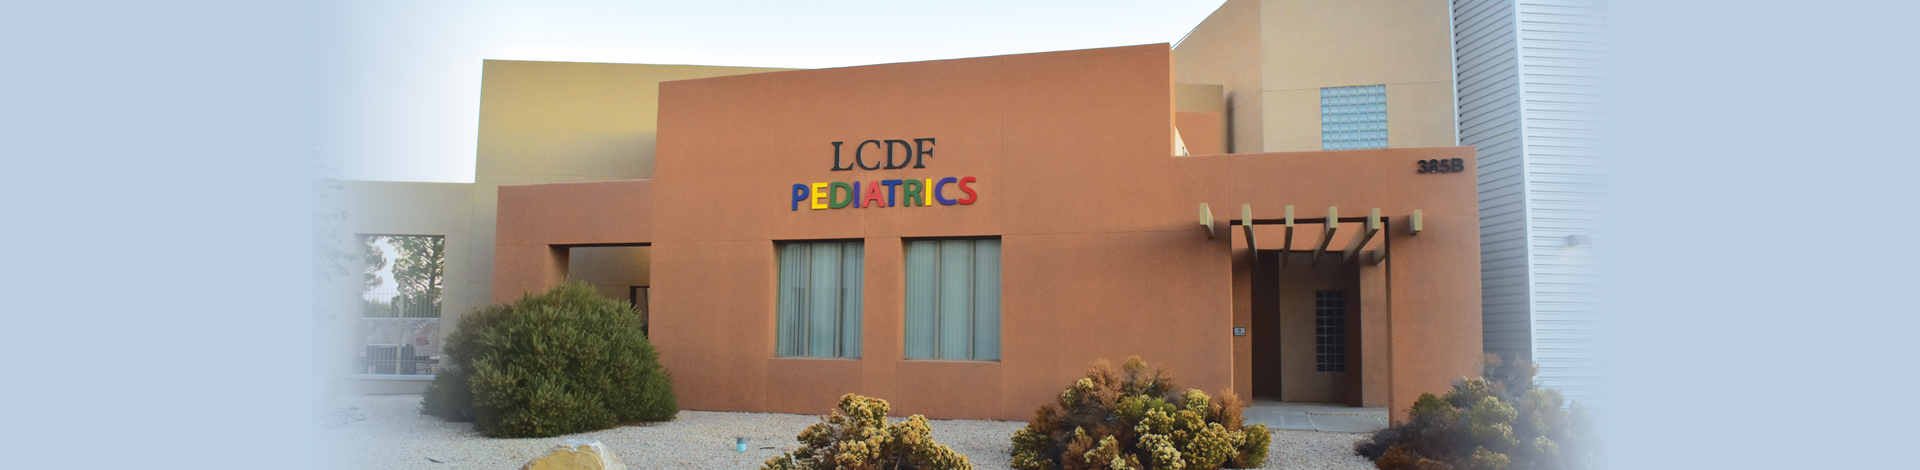 lcdf-pediatrics-banner